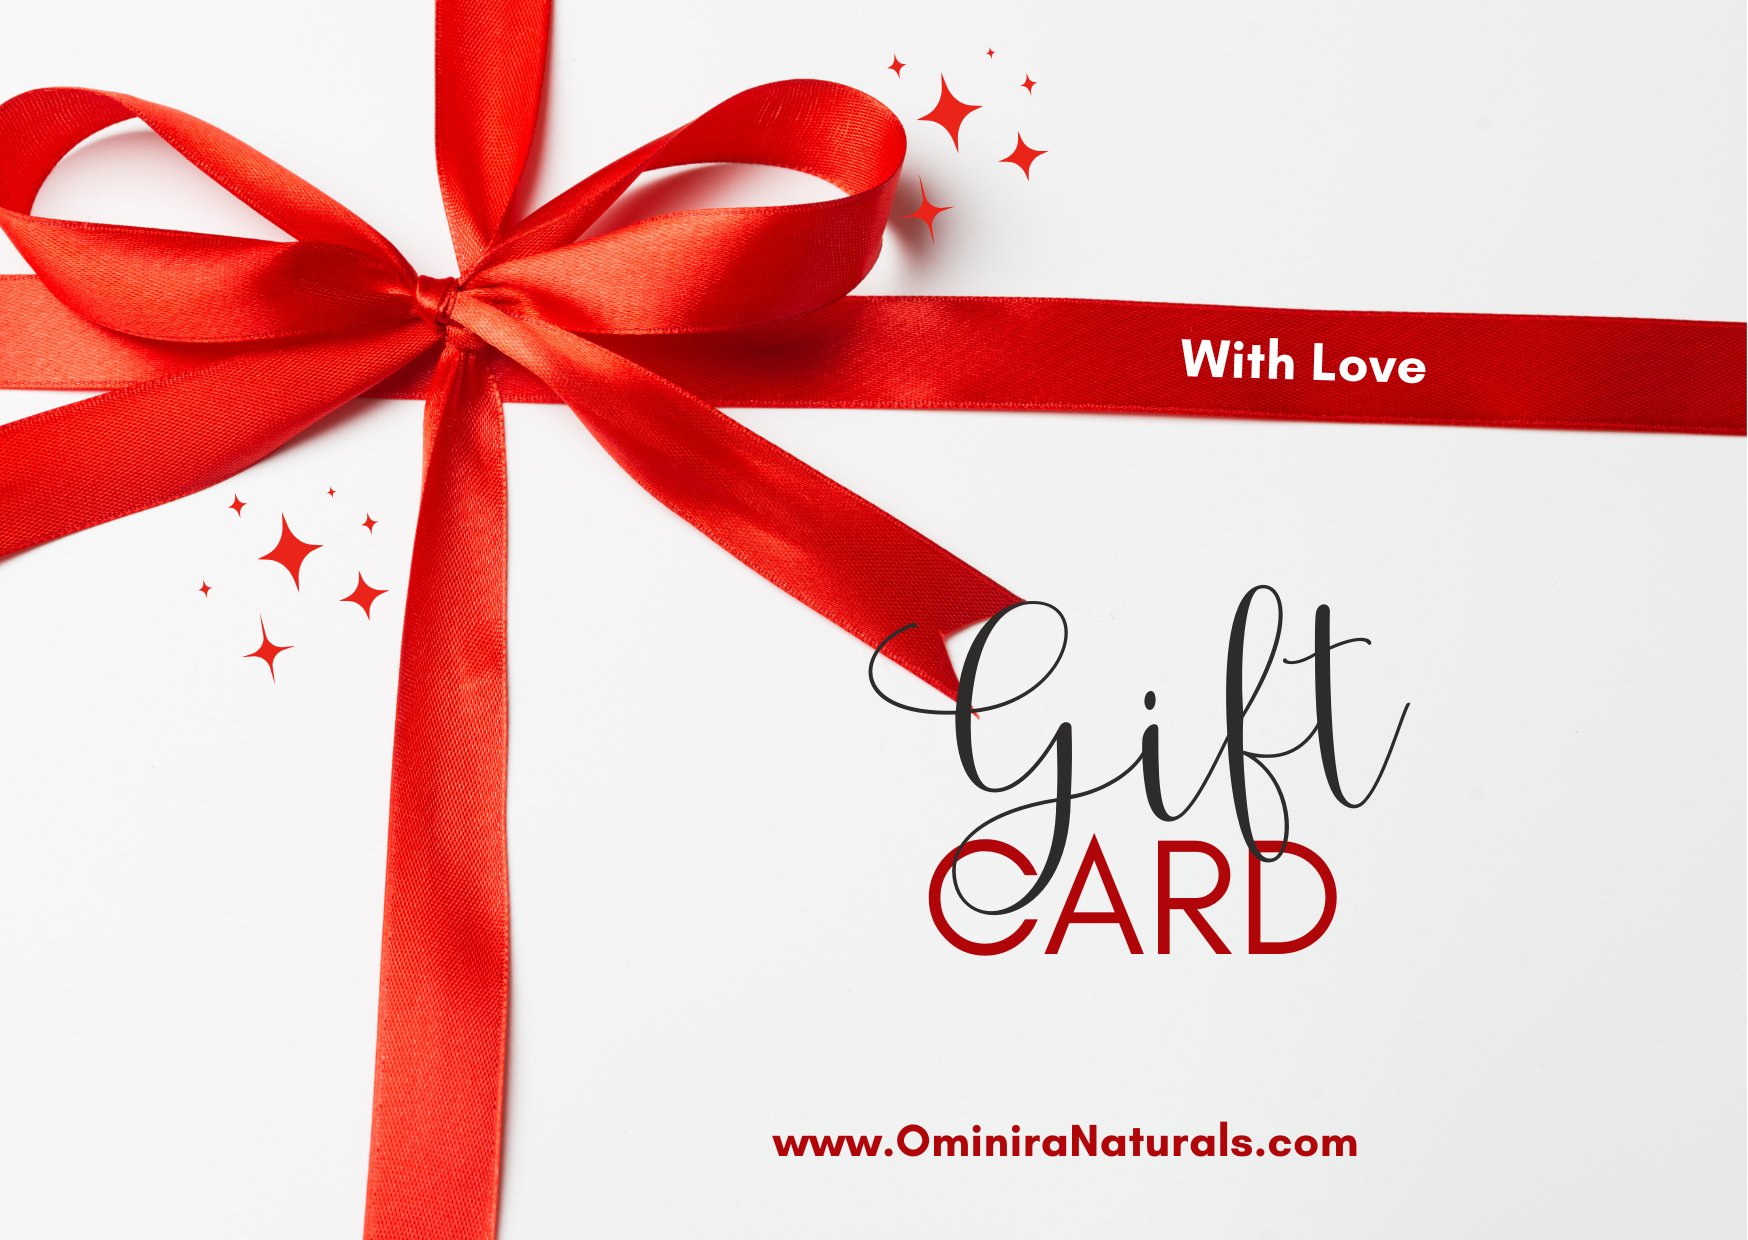 Ominira Naturals E-Gift Card